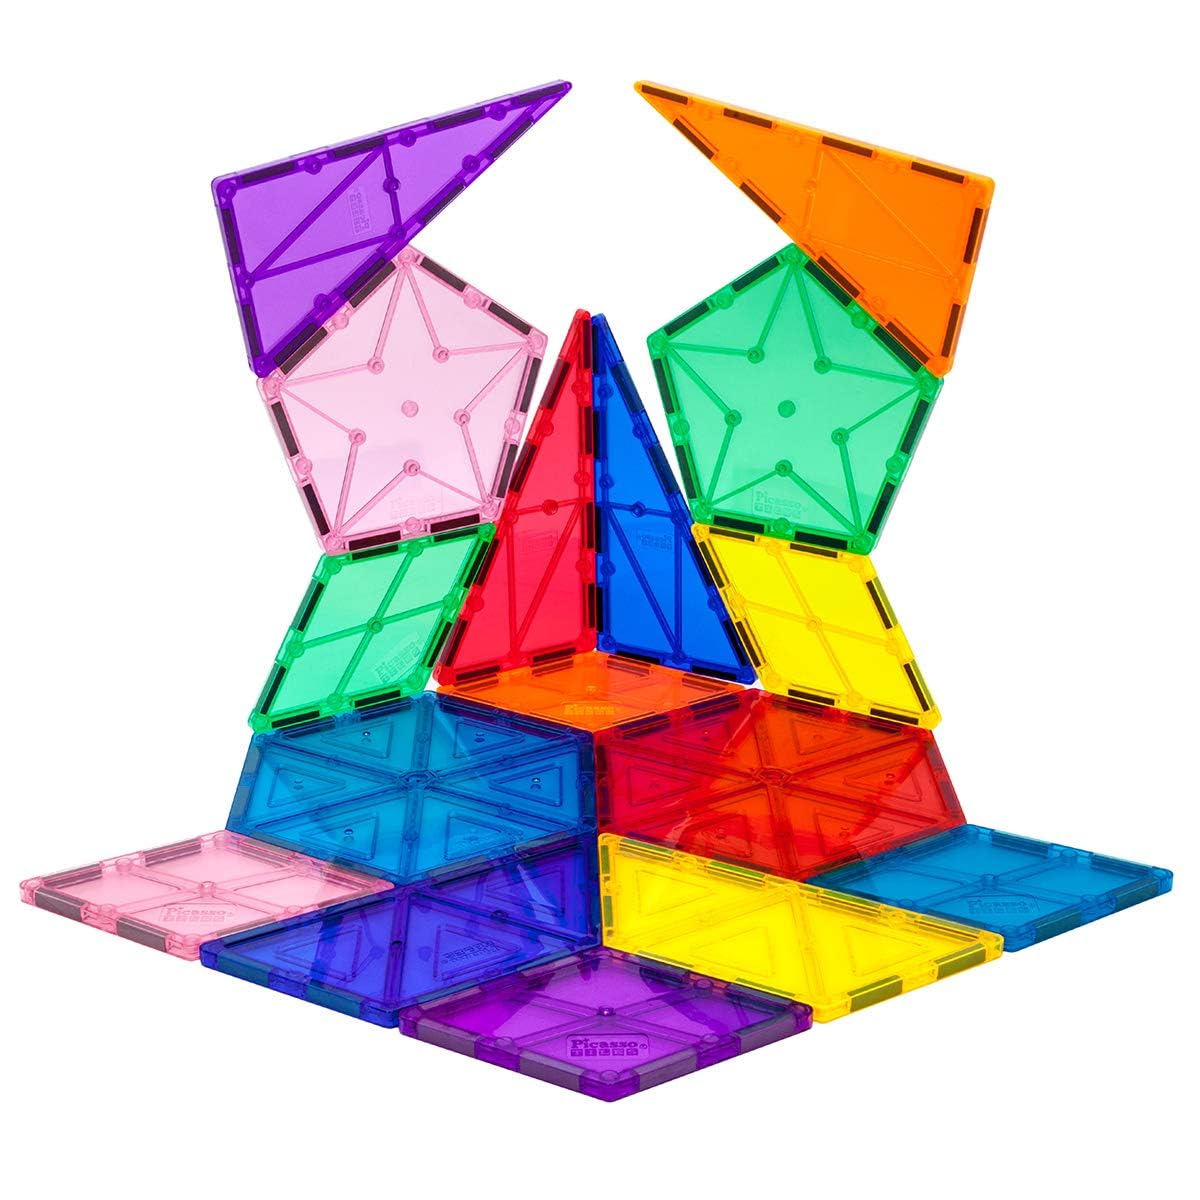 Set PicassoTiles Geometrie - 16 piese magnetice de construcție în diverse forme geometrice